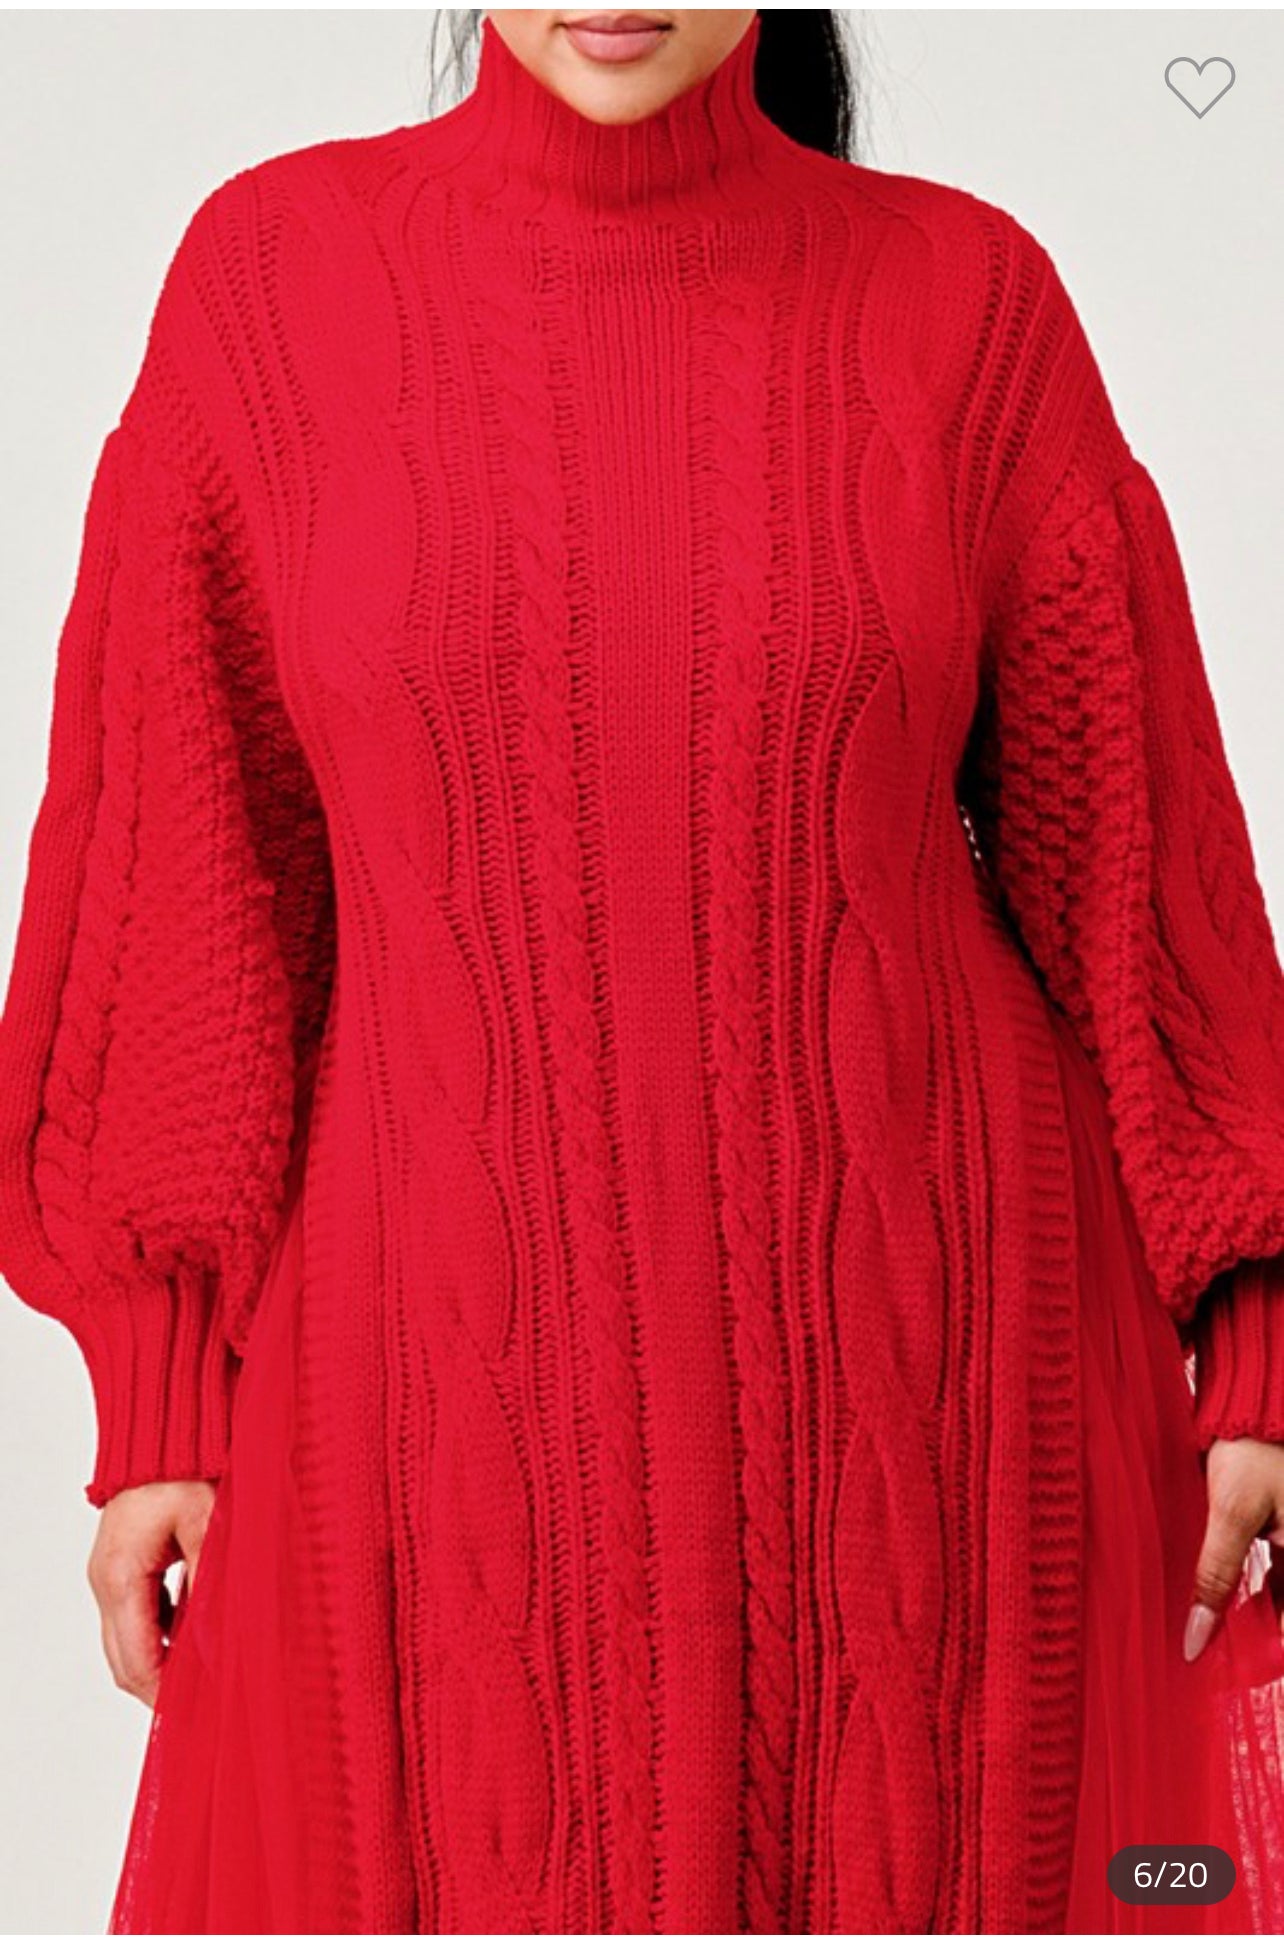 Live Like An Angel Red Holiday Sweater Dress Set